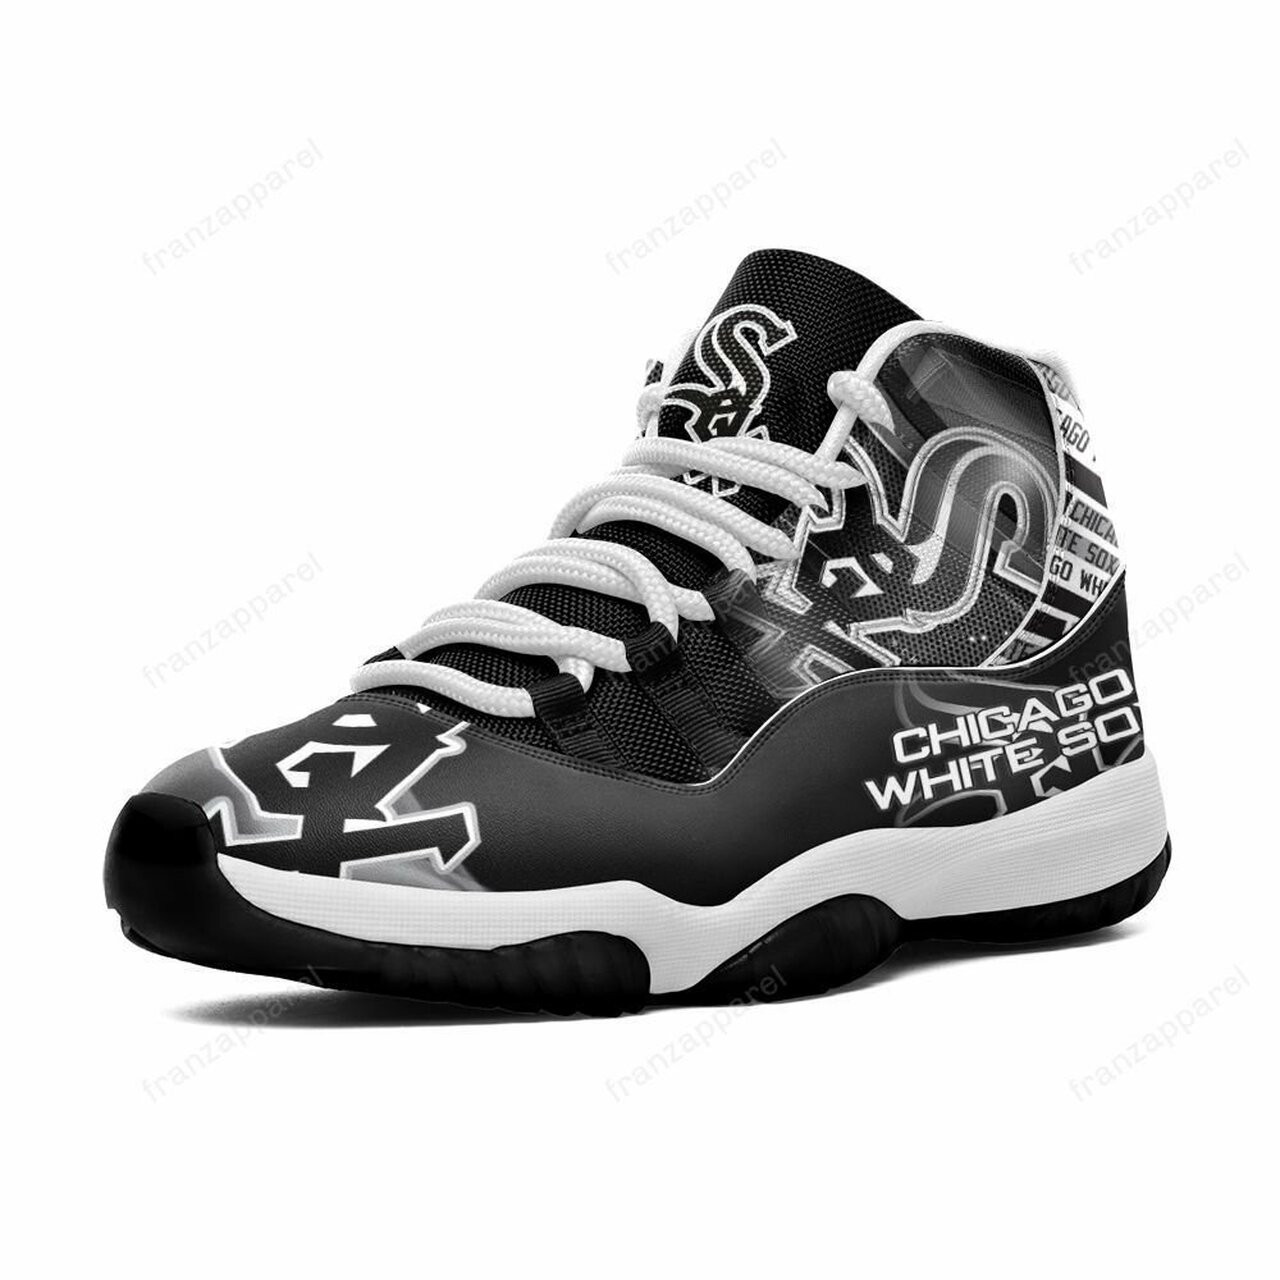 Chicago white sox air jordan 11 sneaker shoes 0181 - men size (us) / 9.5